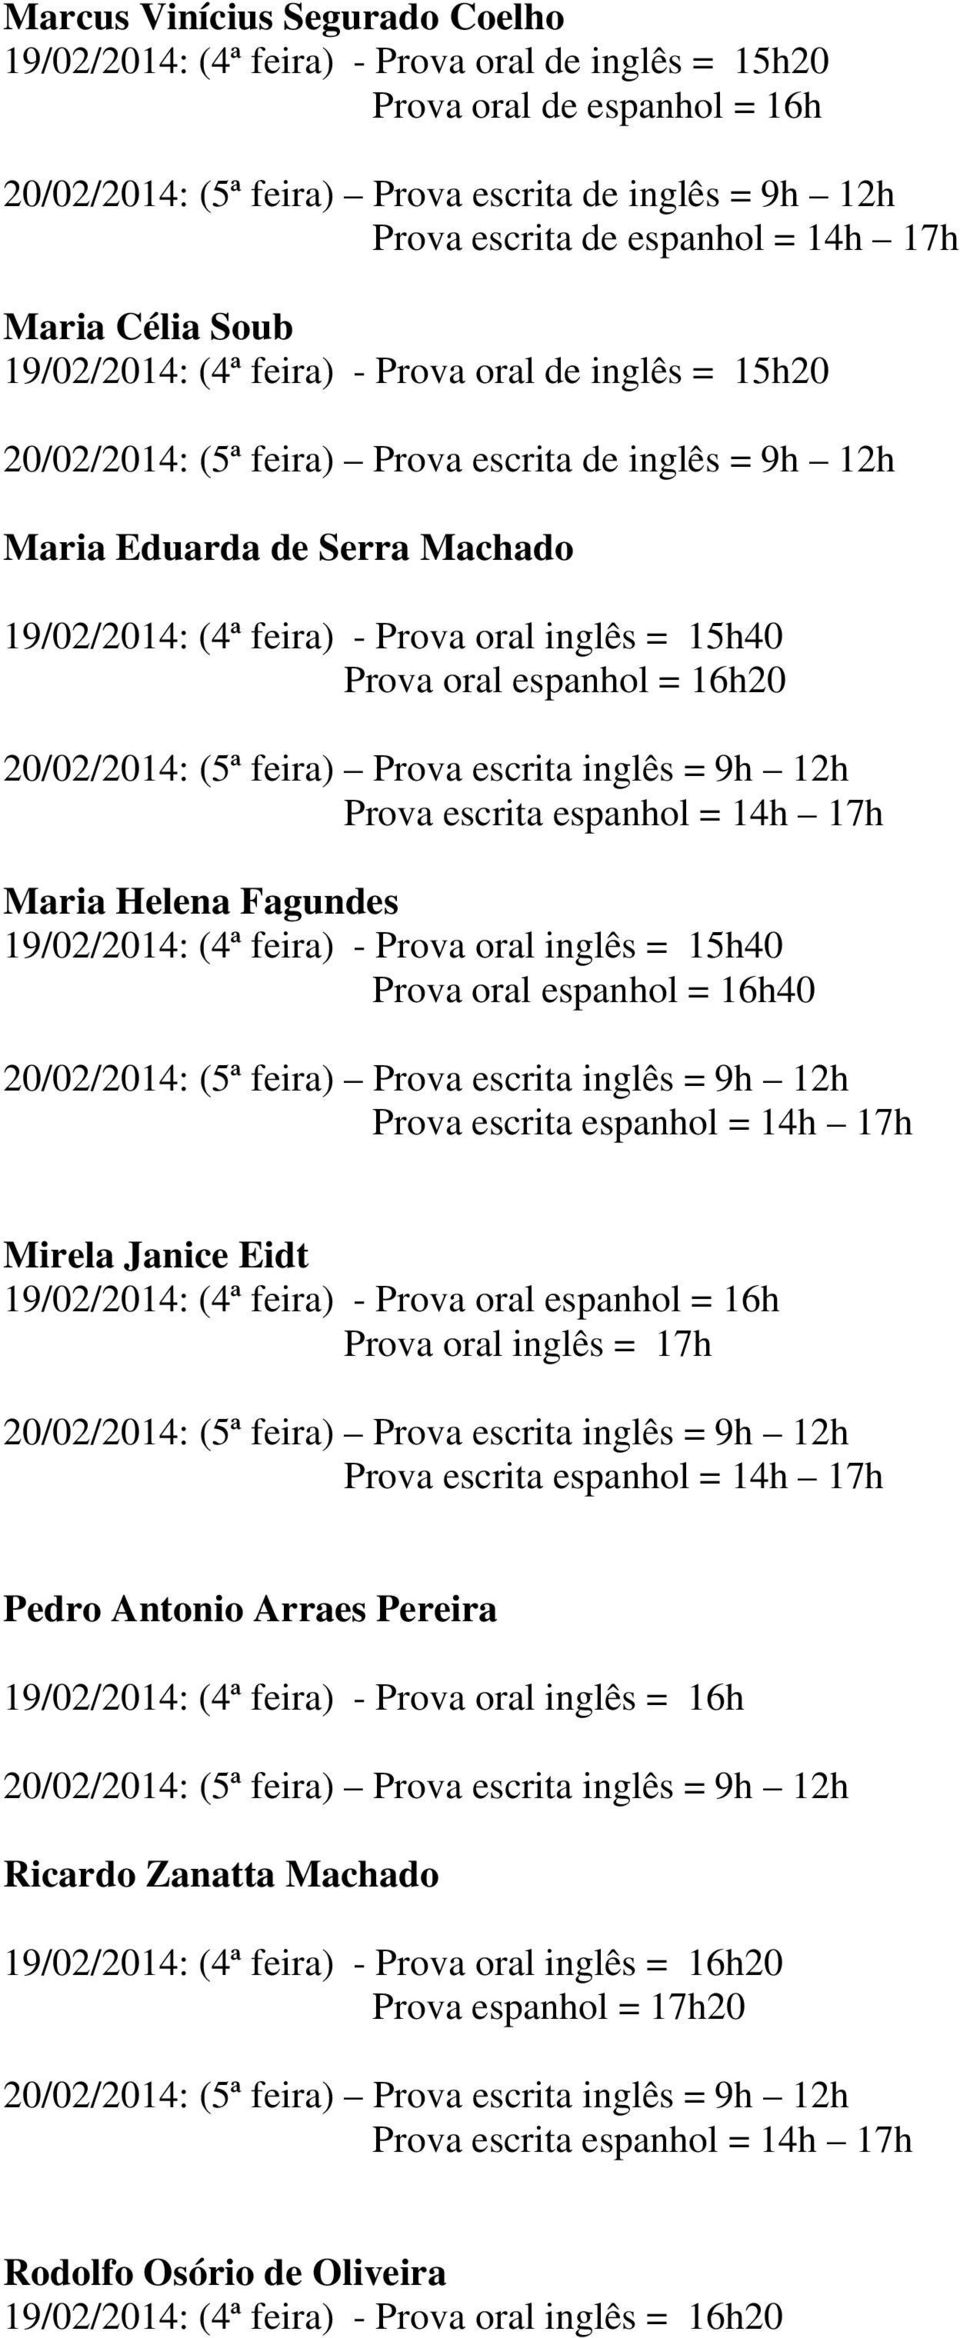 Prova oral espanhol = 16h40 Mirela Janice Eidt 19/02/2014: (4ª feira) - Prova oral espanhol = 16h Prova oral inglês = 17h Pedro Antonio Arraes Pereira 19/02/2014: (4ª feira) - Prova